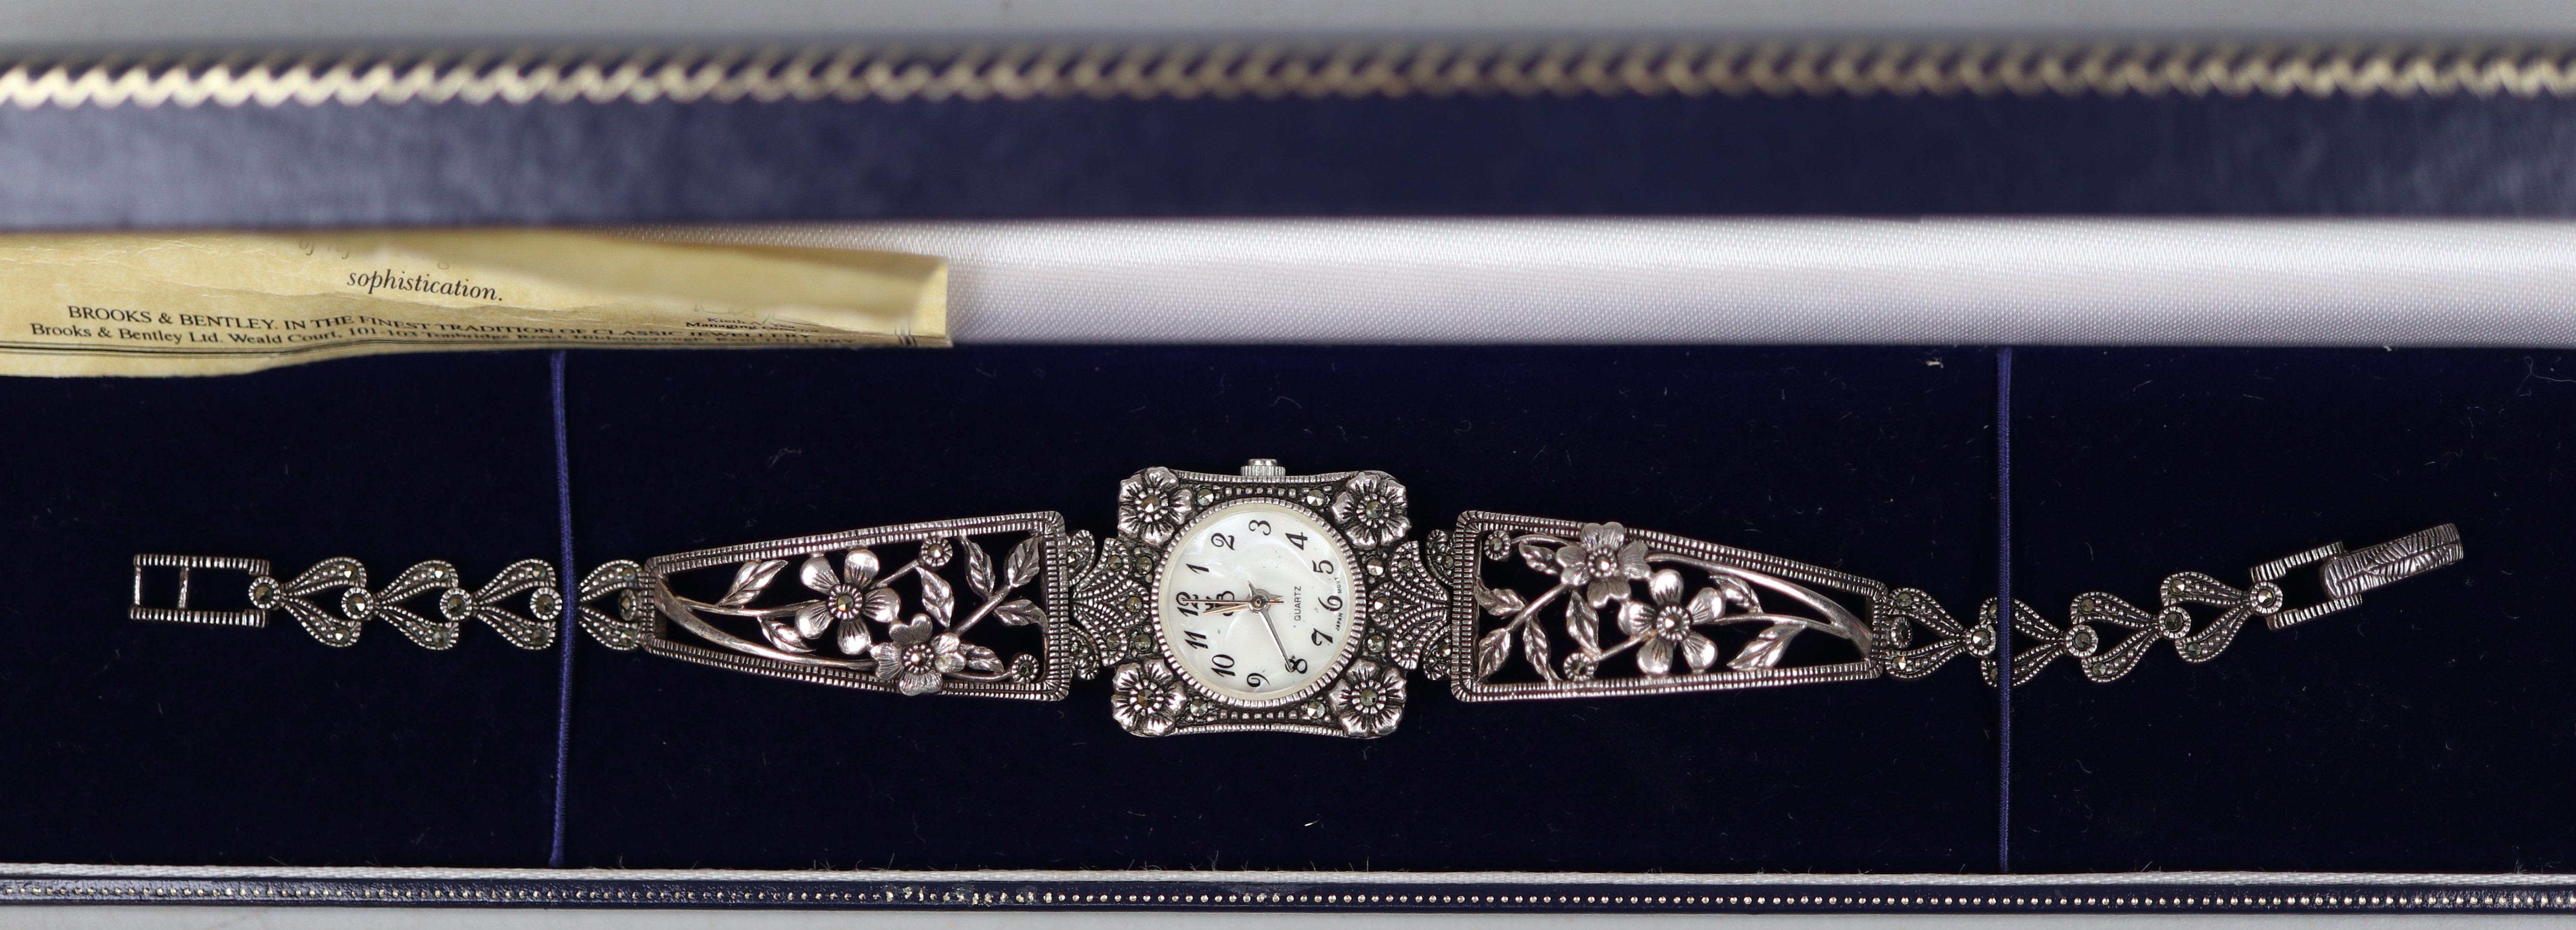 Brooks & Bentley hallmarked silver marcasite watch in good working order. - Image 2 of 2